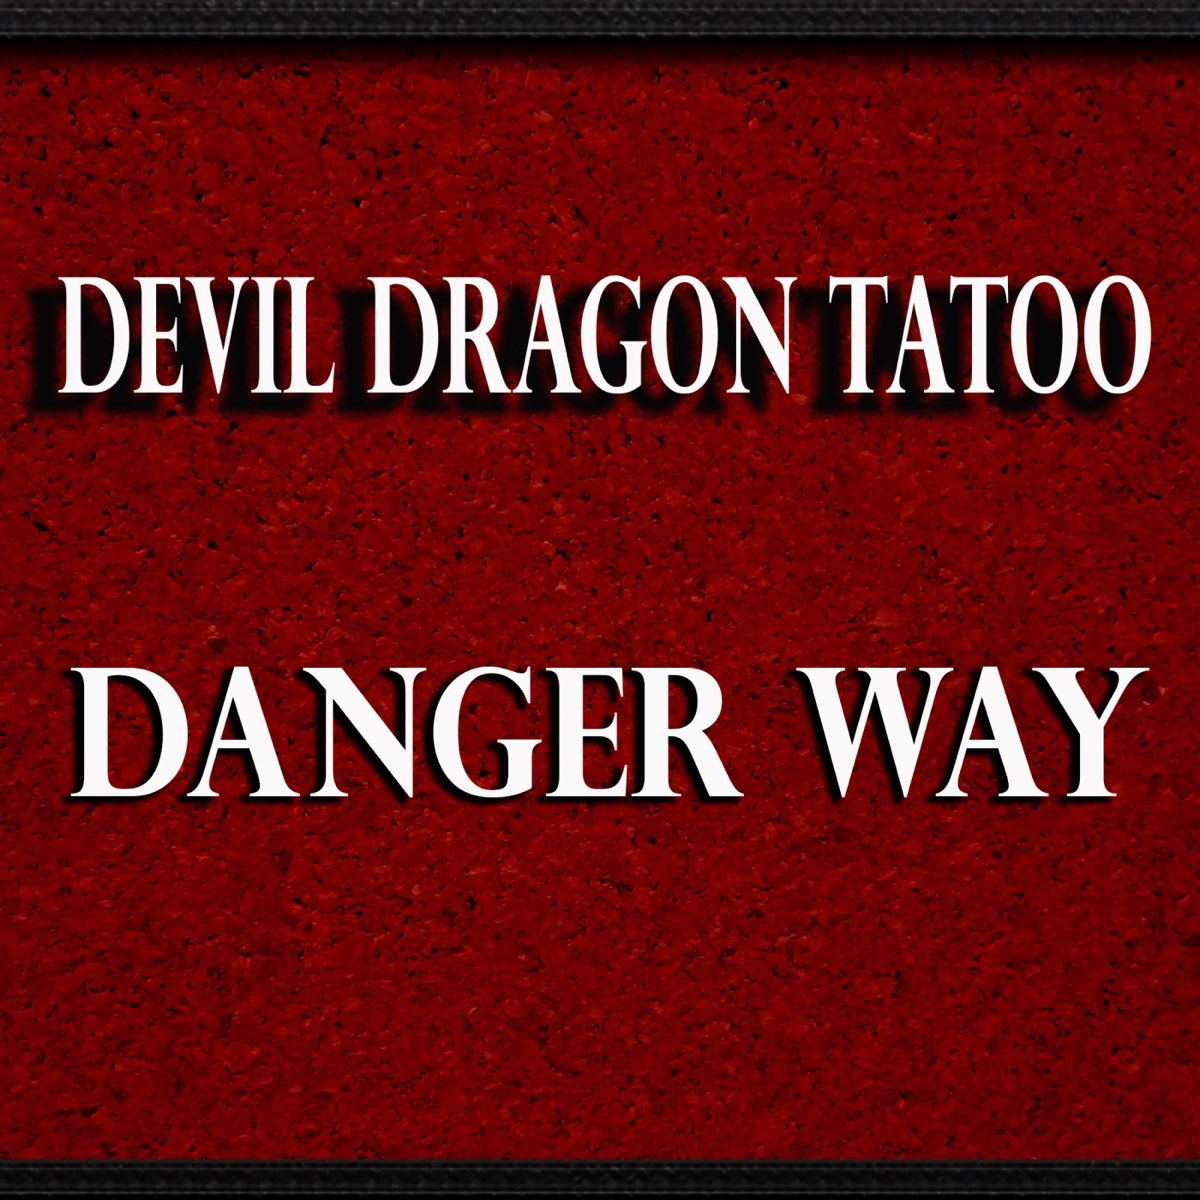 Dangerous way. Devil's manner. Devils manner Song.